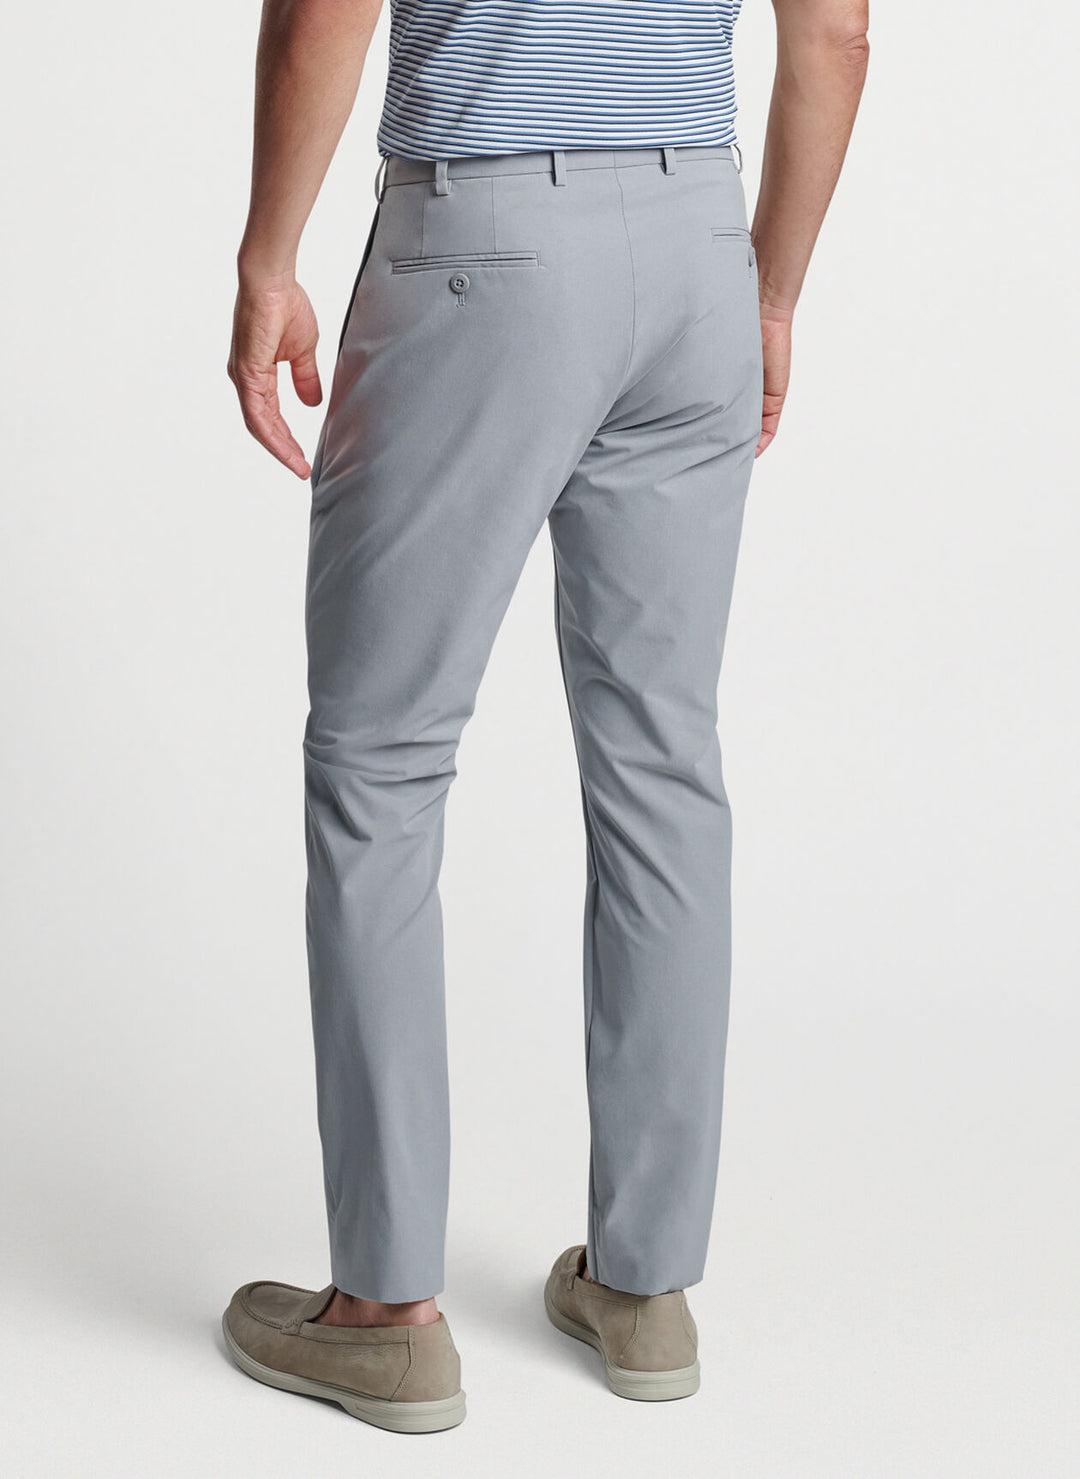 Peter Millar Surge Performance Trouser In Gale Grey